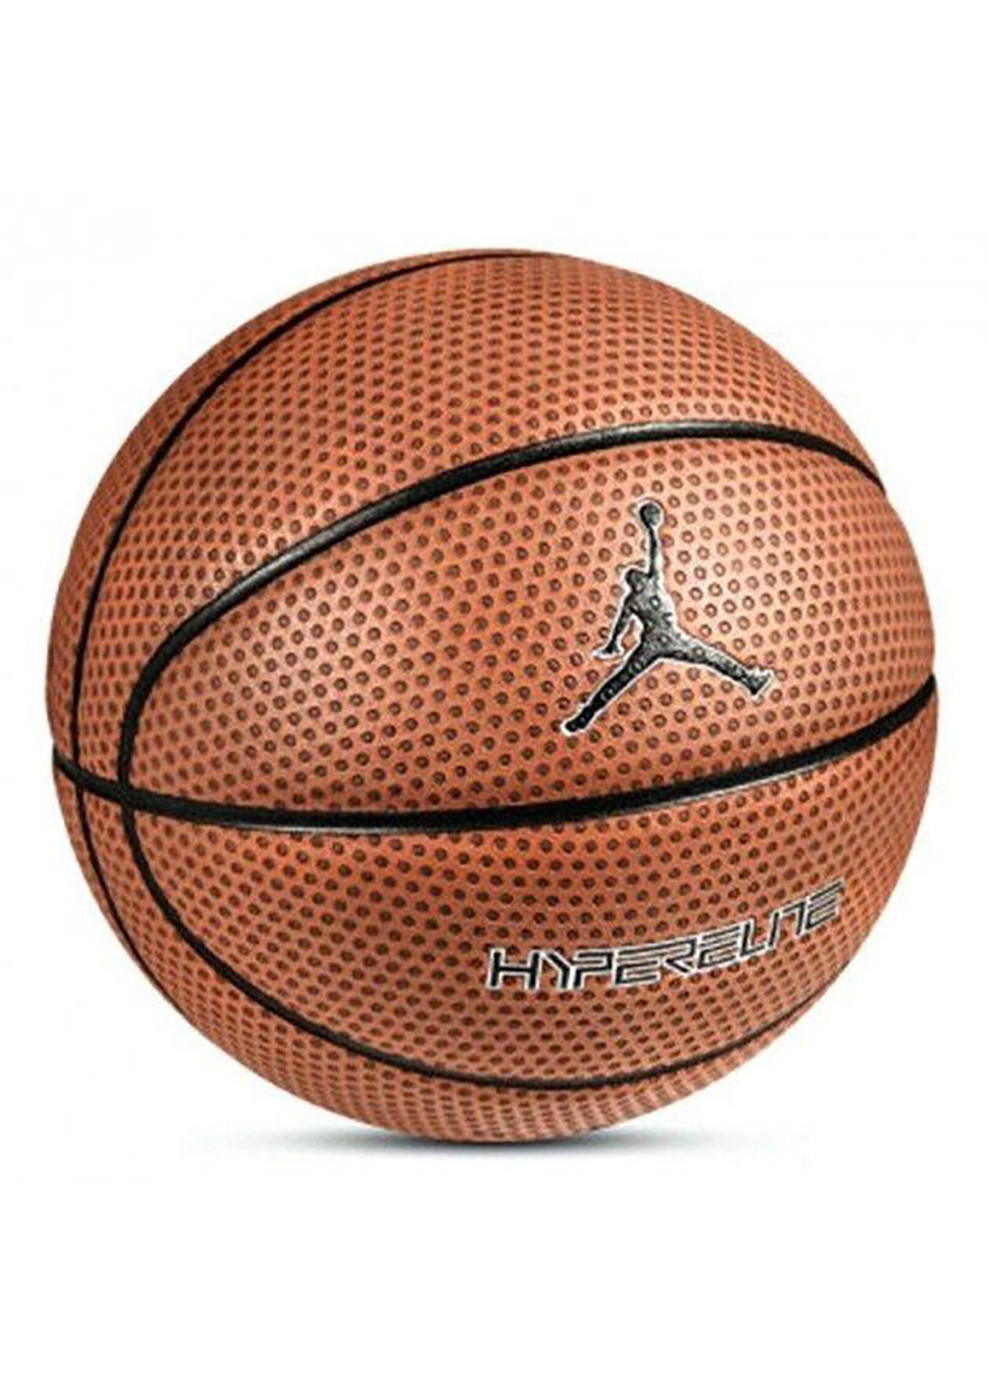 Мяч баскетбольный Jordan Hyper Elite 8P Size 7 Amber / Black / Metallic Silver / Black (J.KI.00.858.07) Nike (253677569)